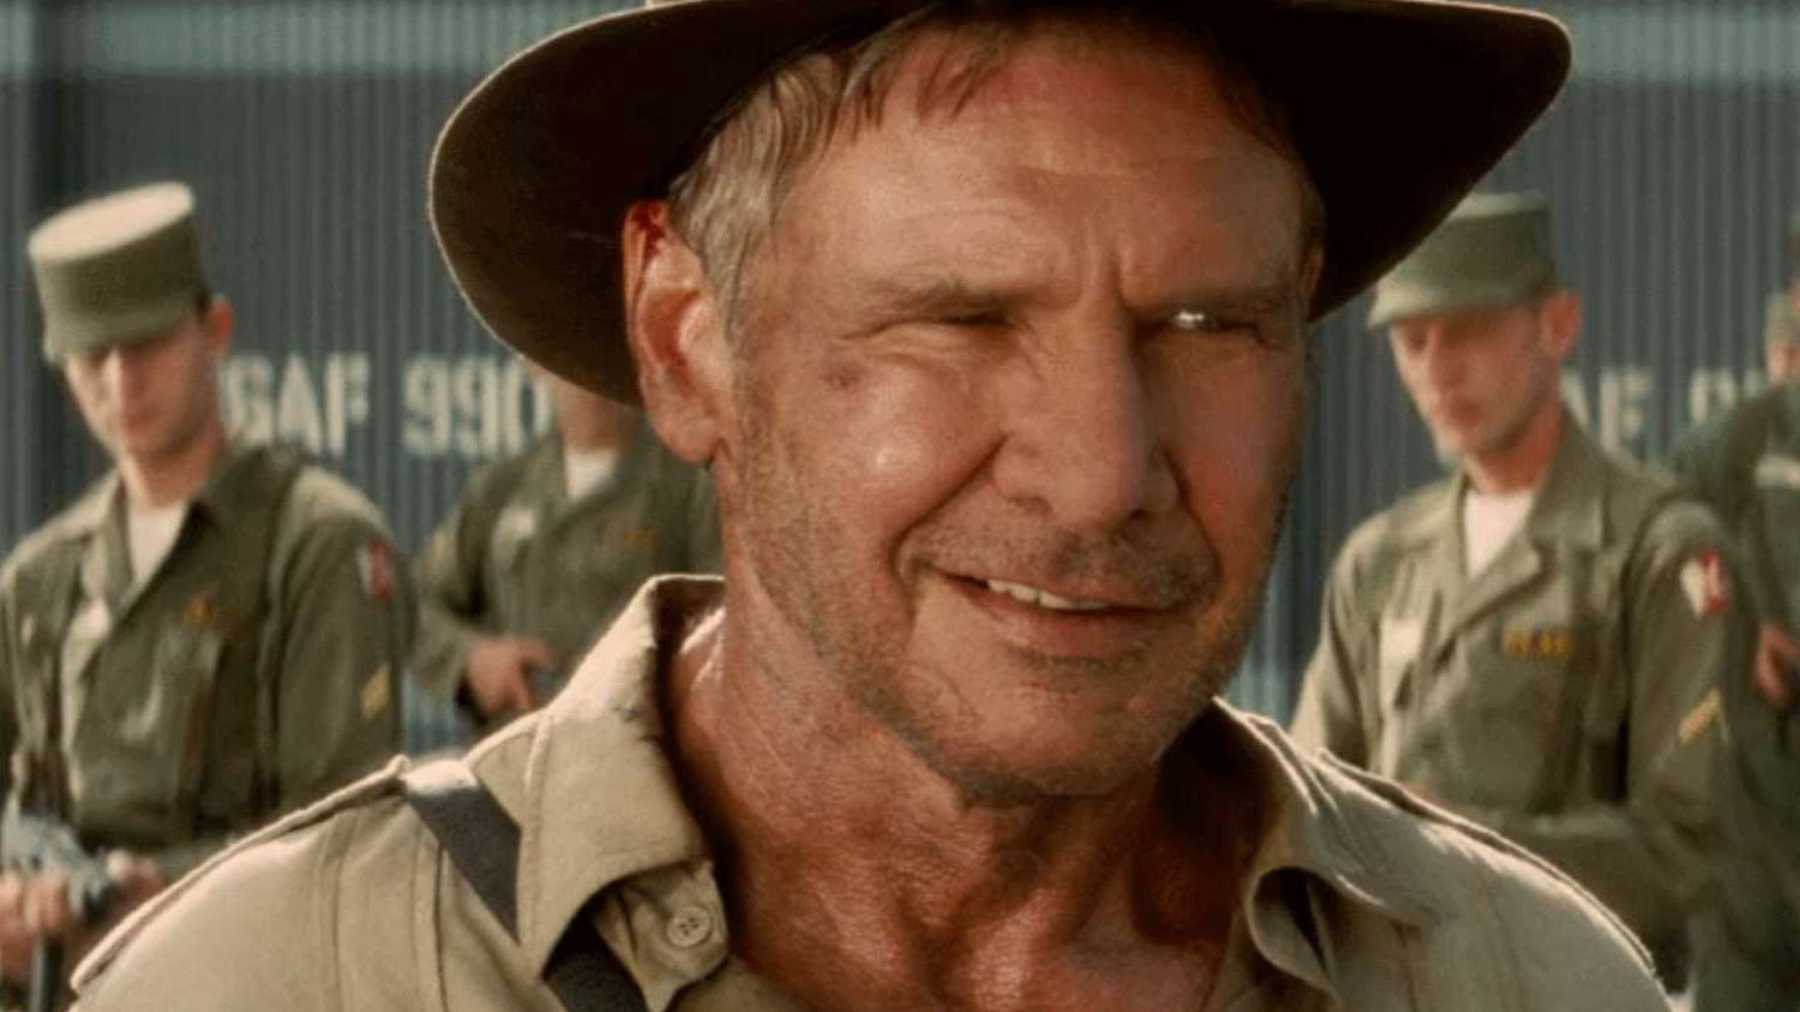 ‘Indiana Jones 5’ Is Confirmed To NOT Be A Reboot